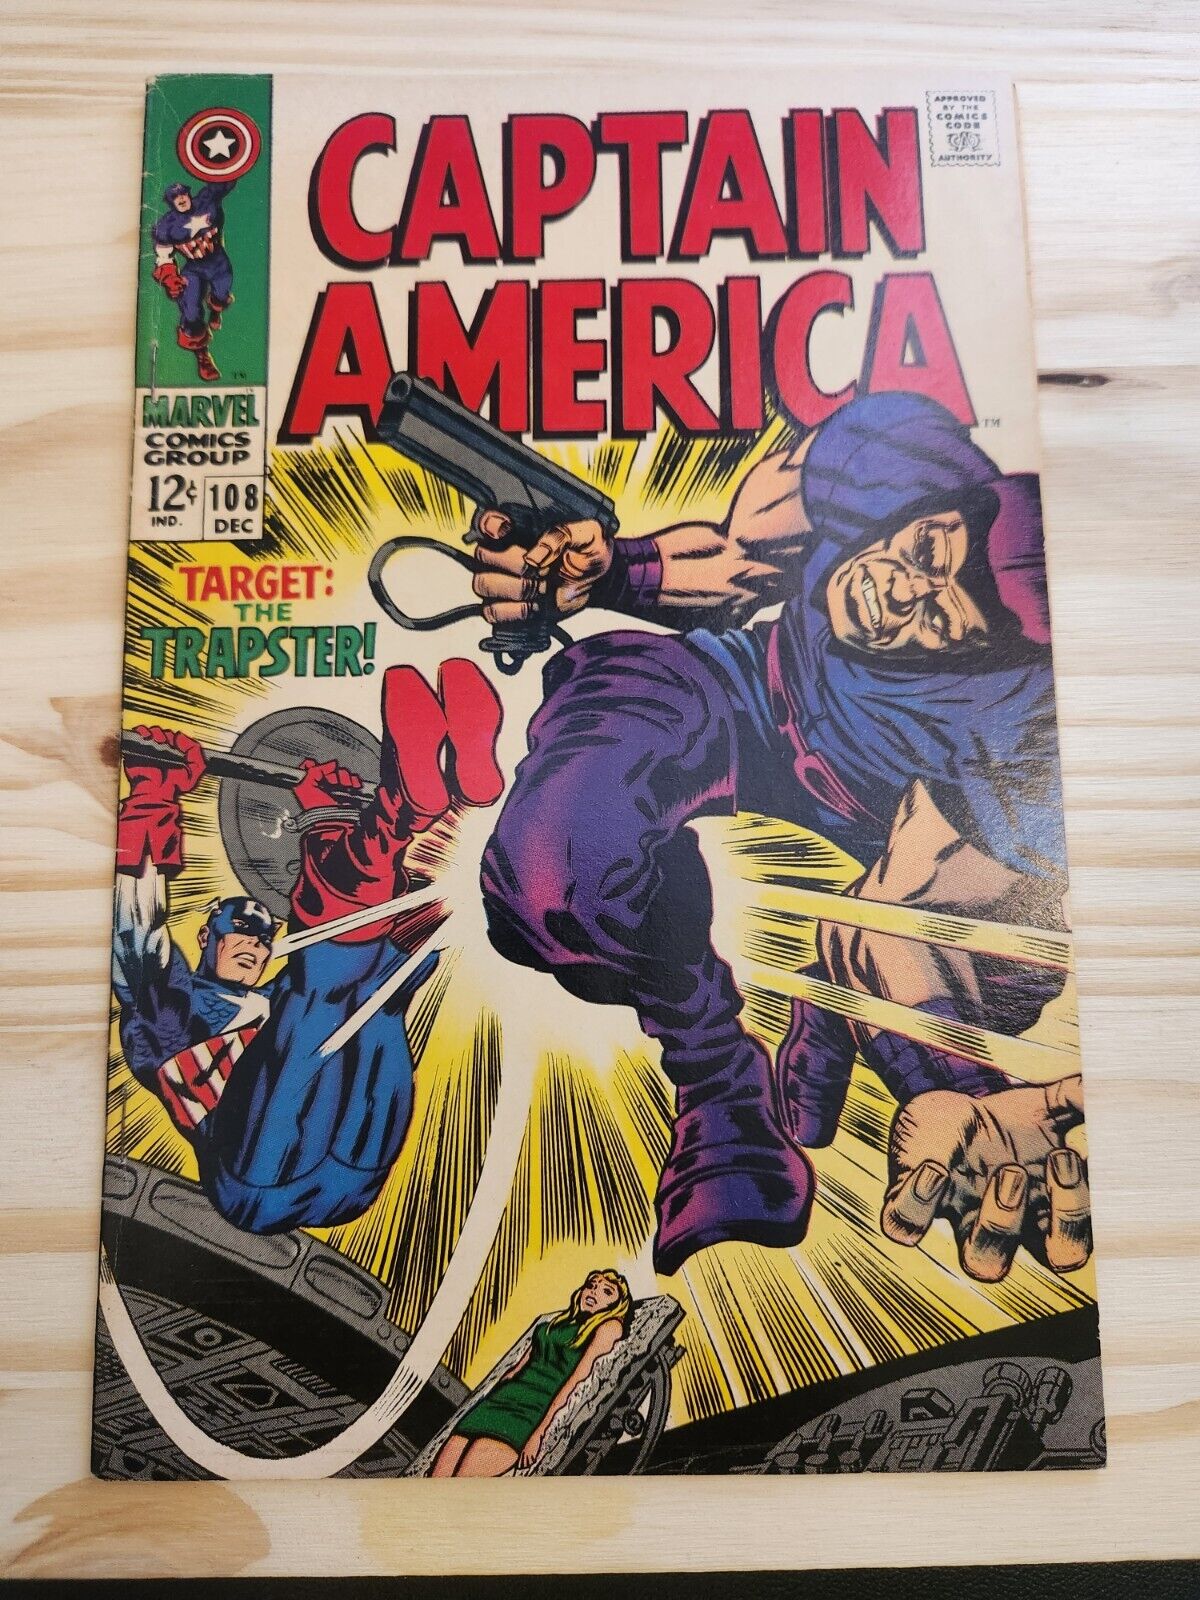 1968 Marvel Comics Captain America #108 BINDING / STAPLE ERROR CGC Green Label